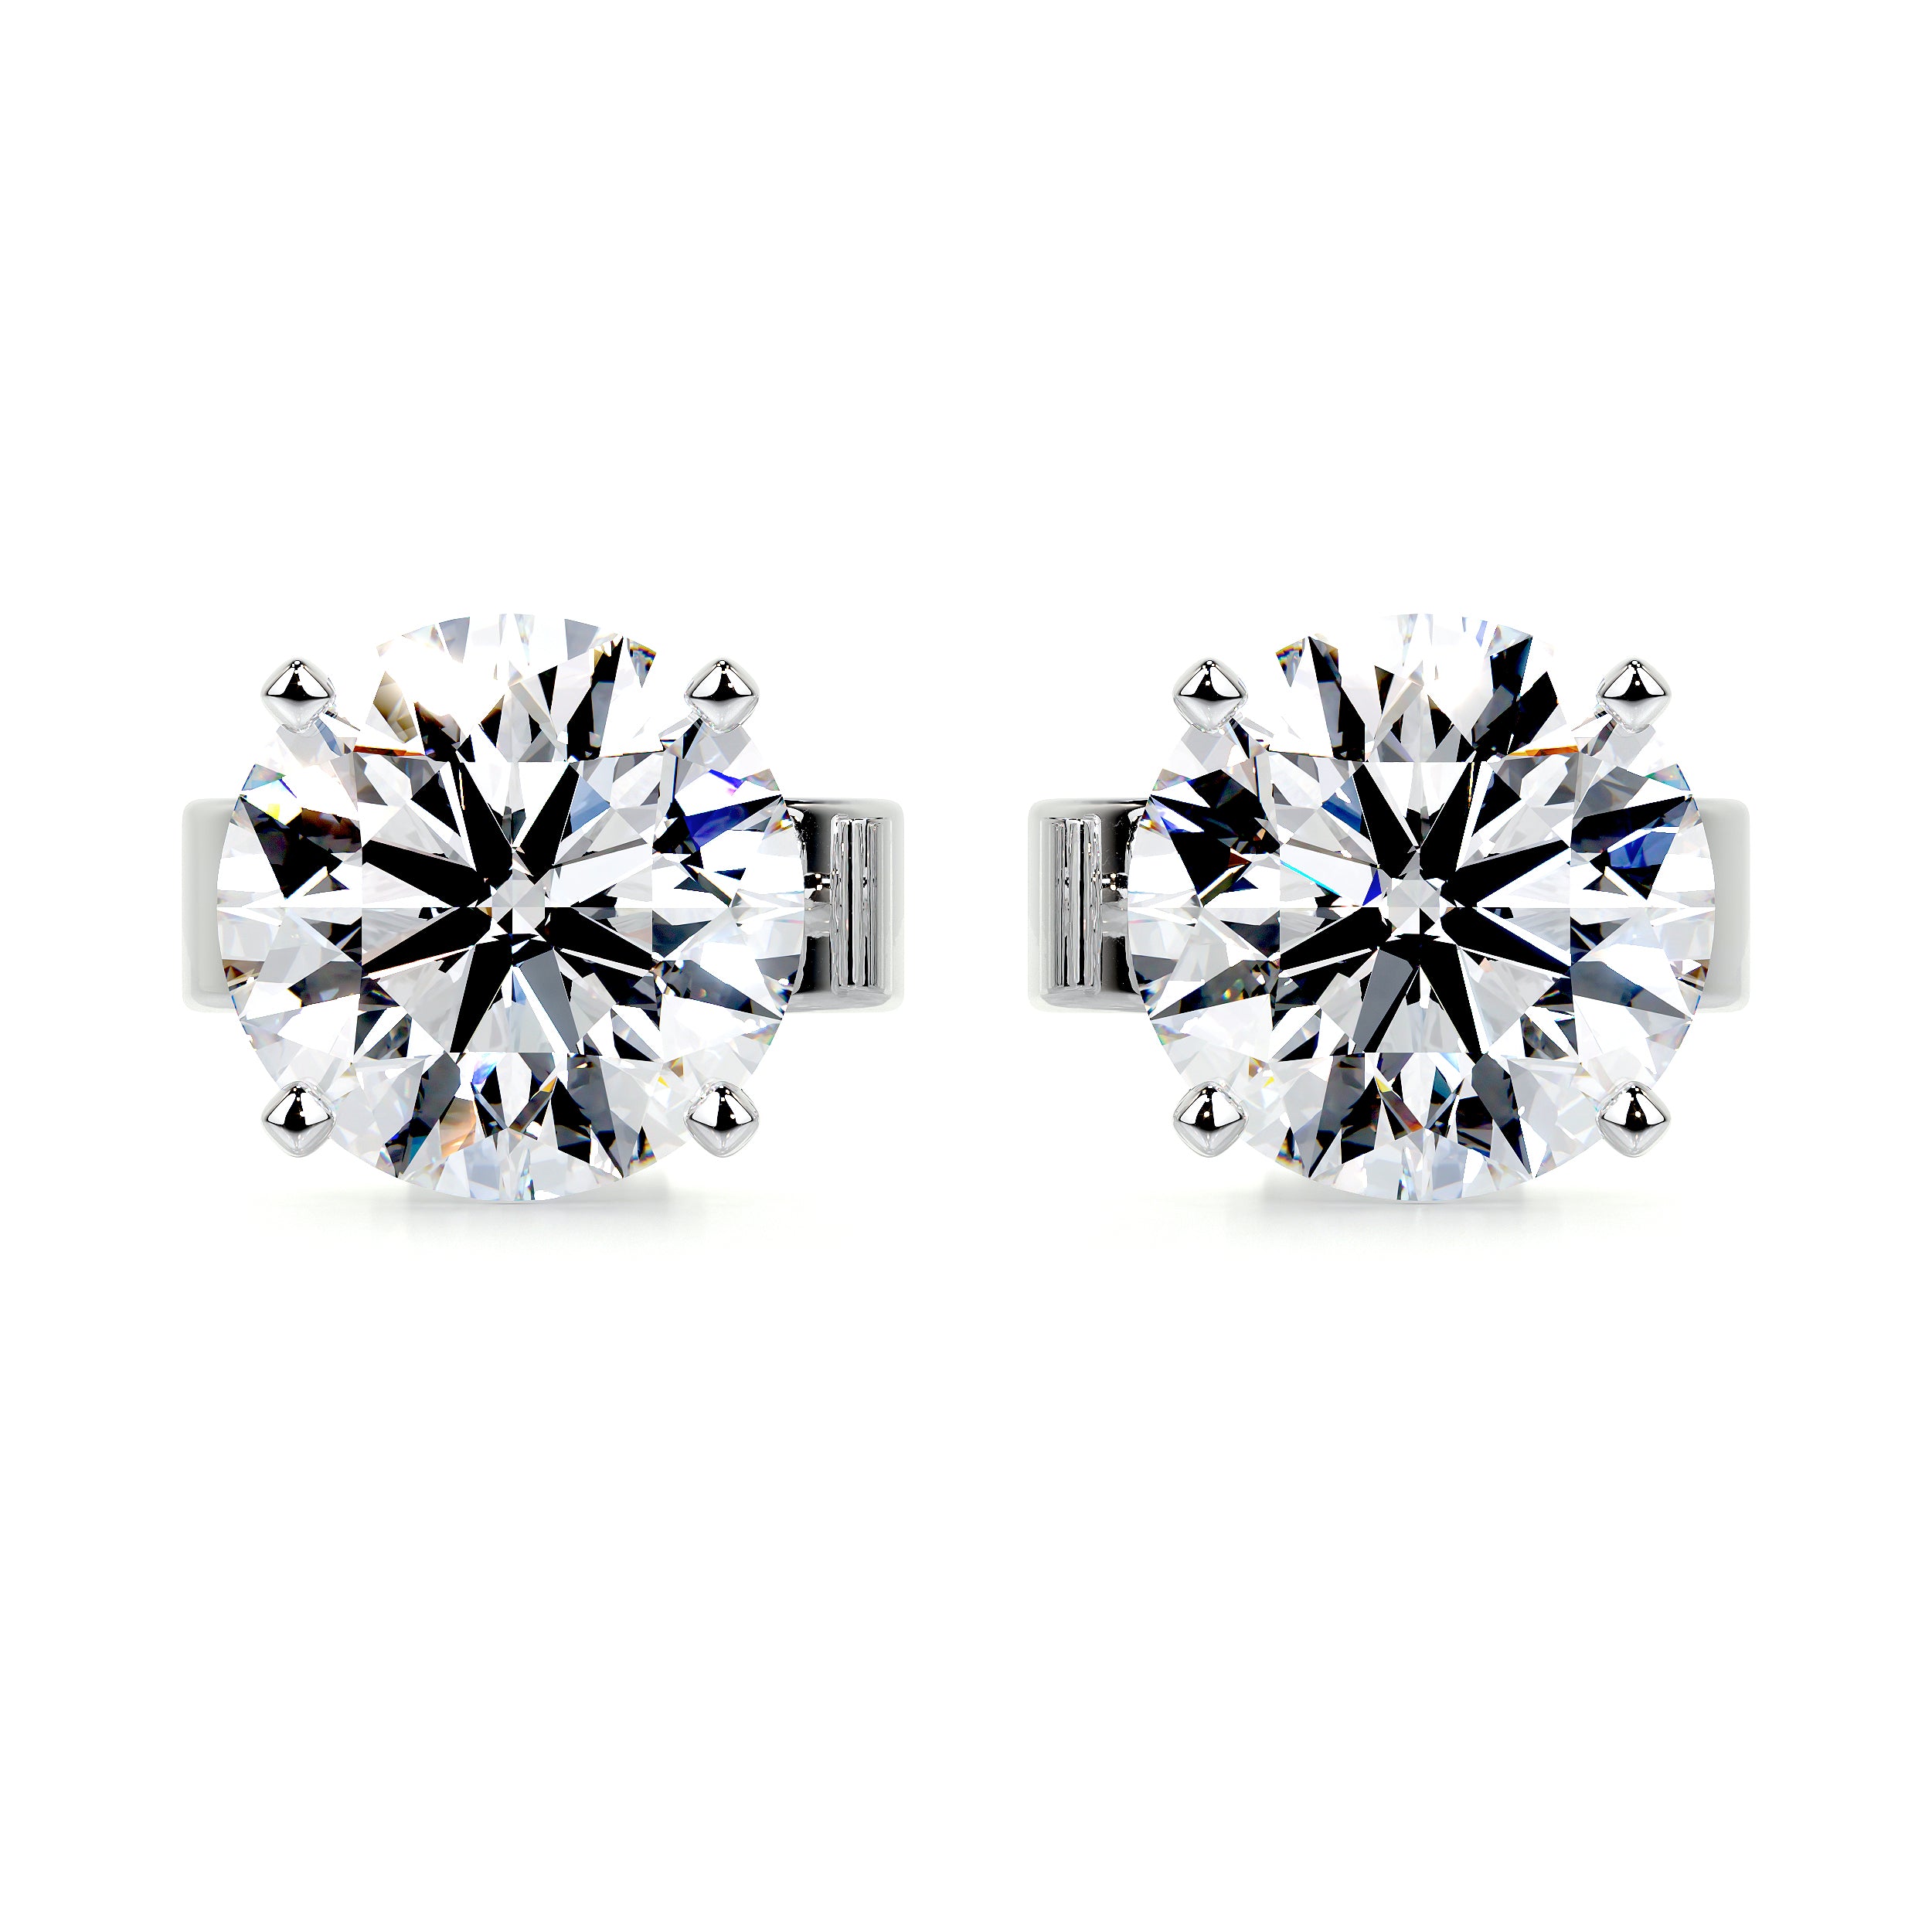 Allen Diamond Earrings   (6 Carat) -18K White Gold